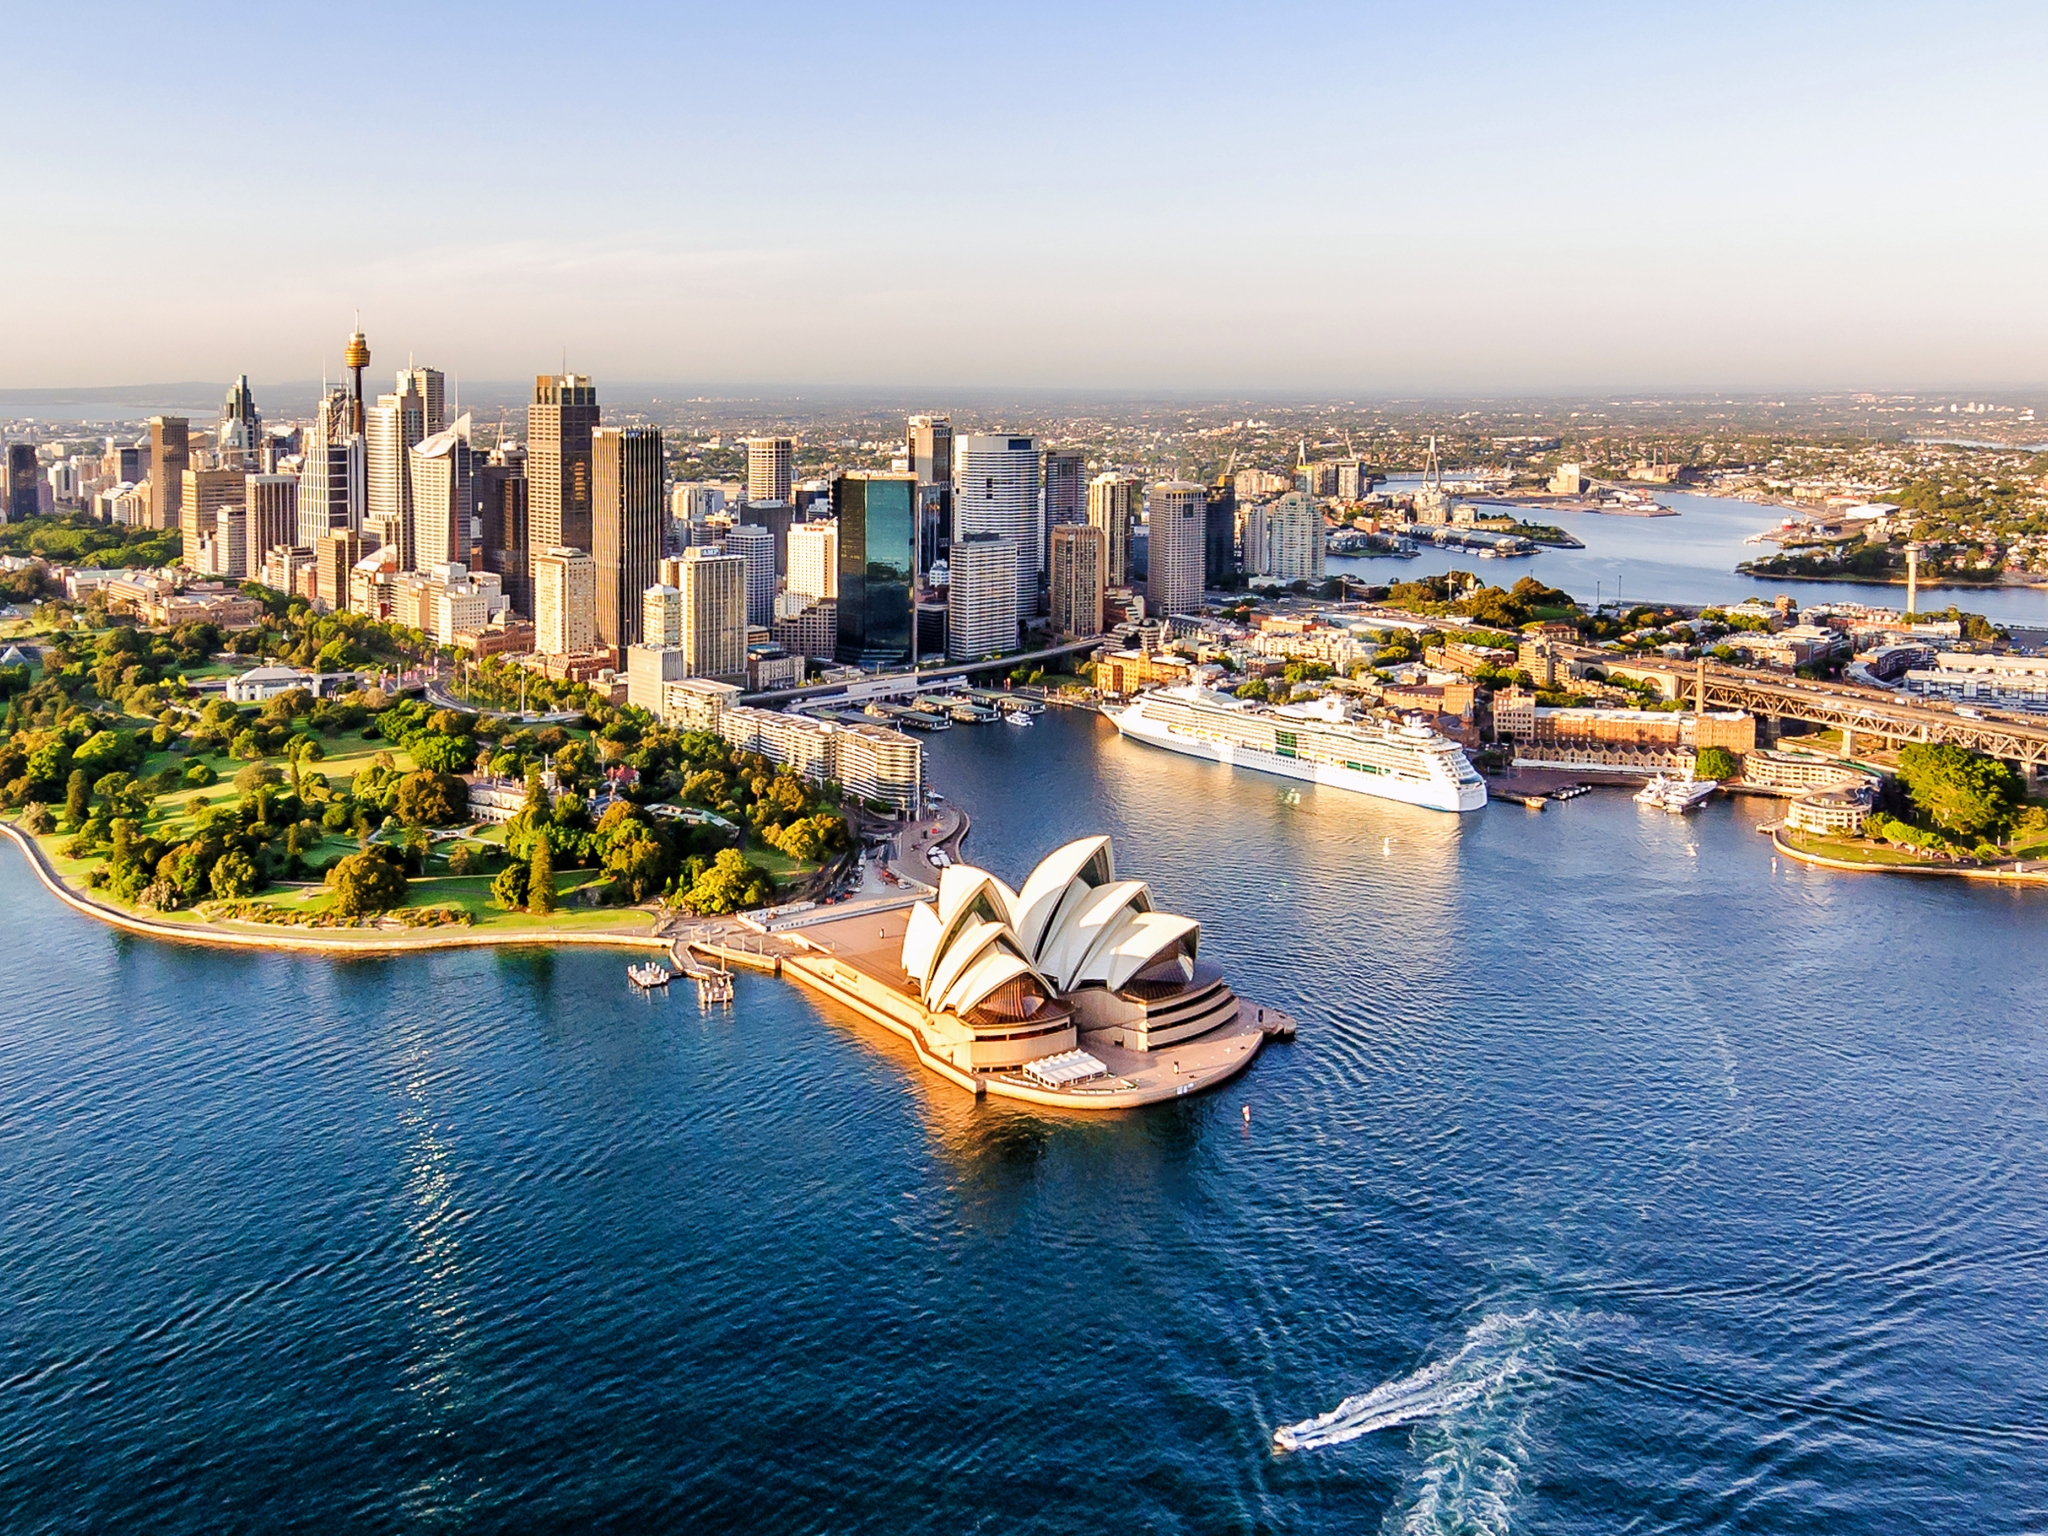 Image: City, Sydney, Australia, buildings, skyscrapers, theater, water, steam, promenade, panorama, horizon